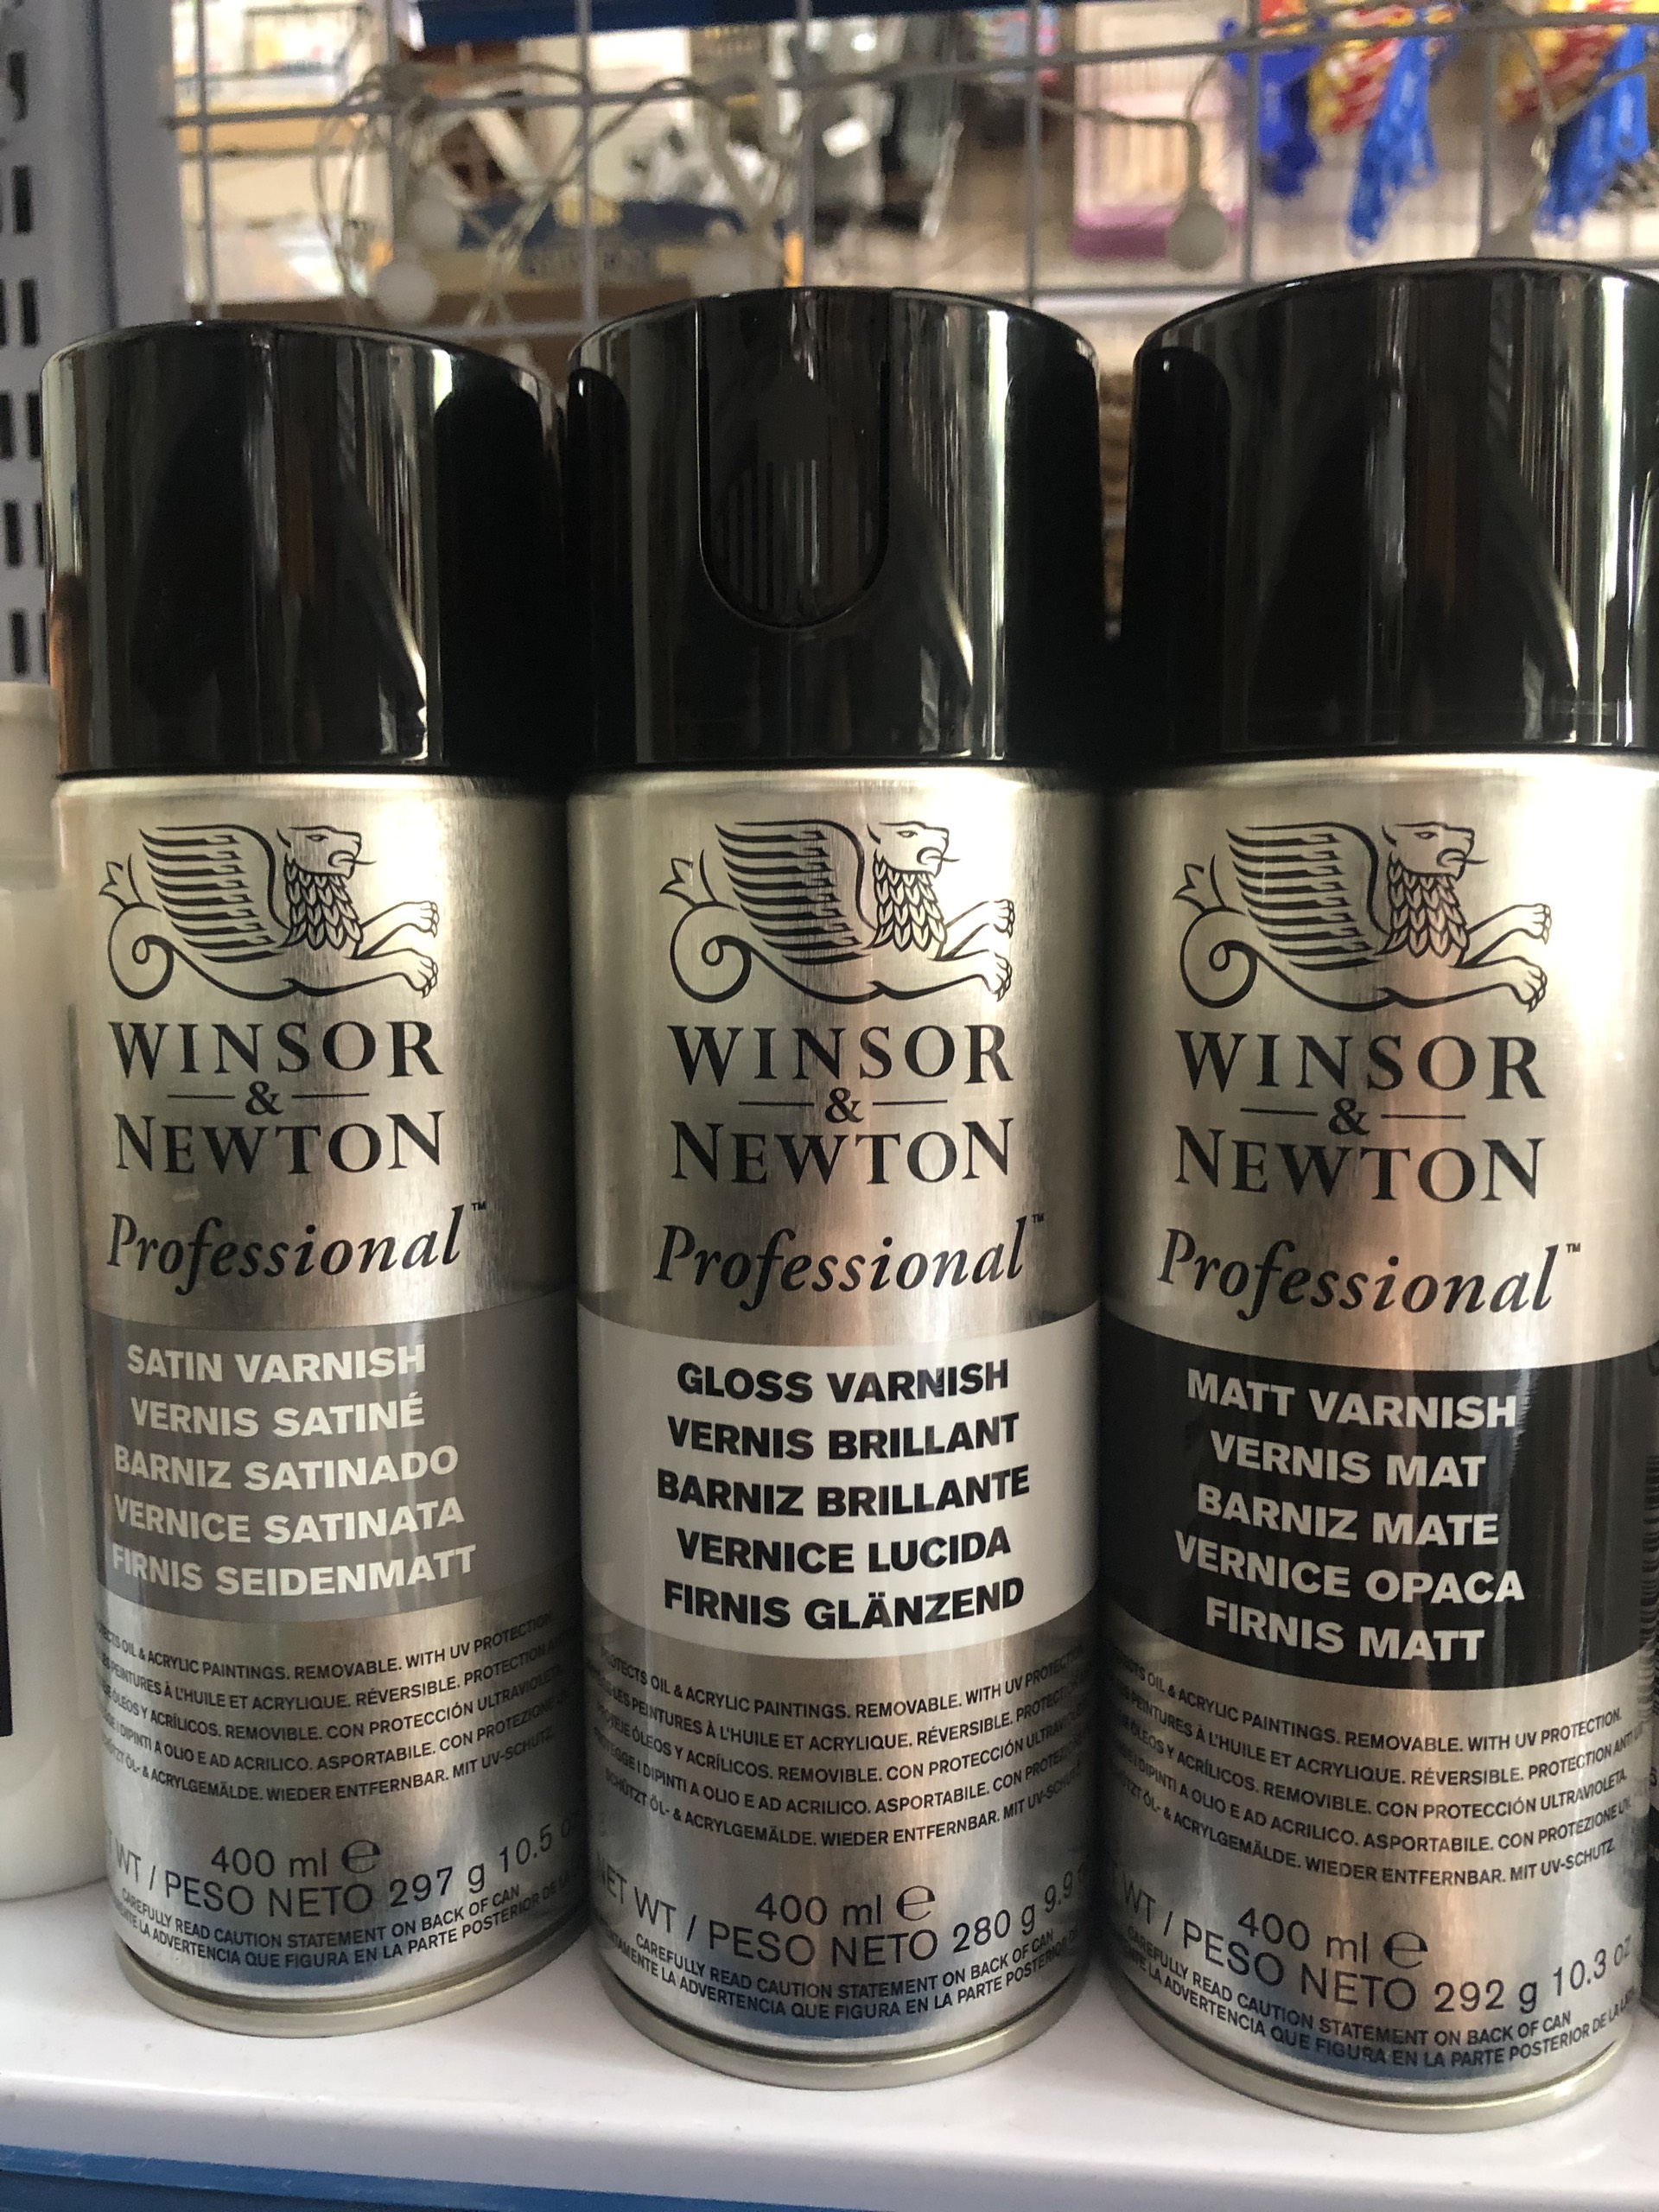 Winsor & Newton Professional Gloss or Satin Varnish Spray, 400ml